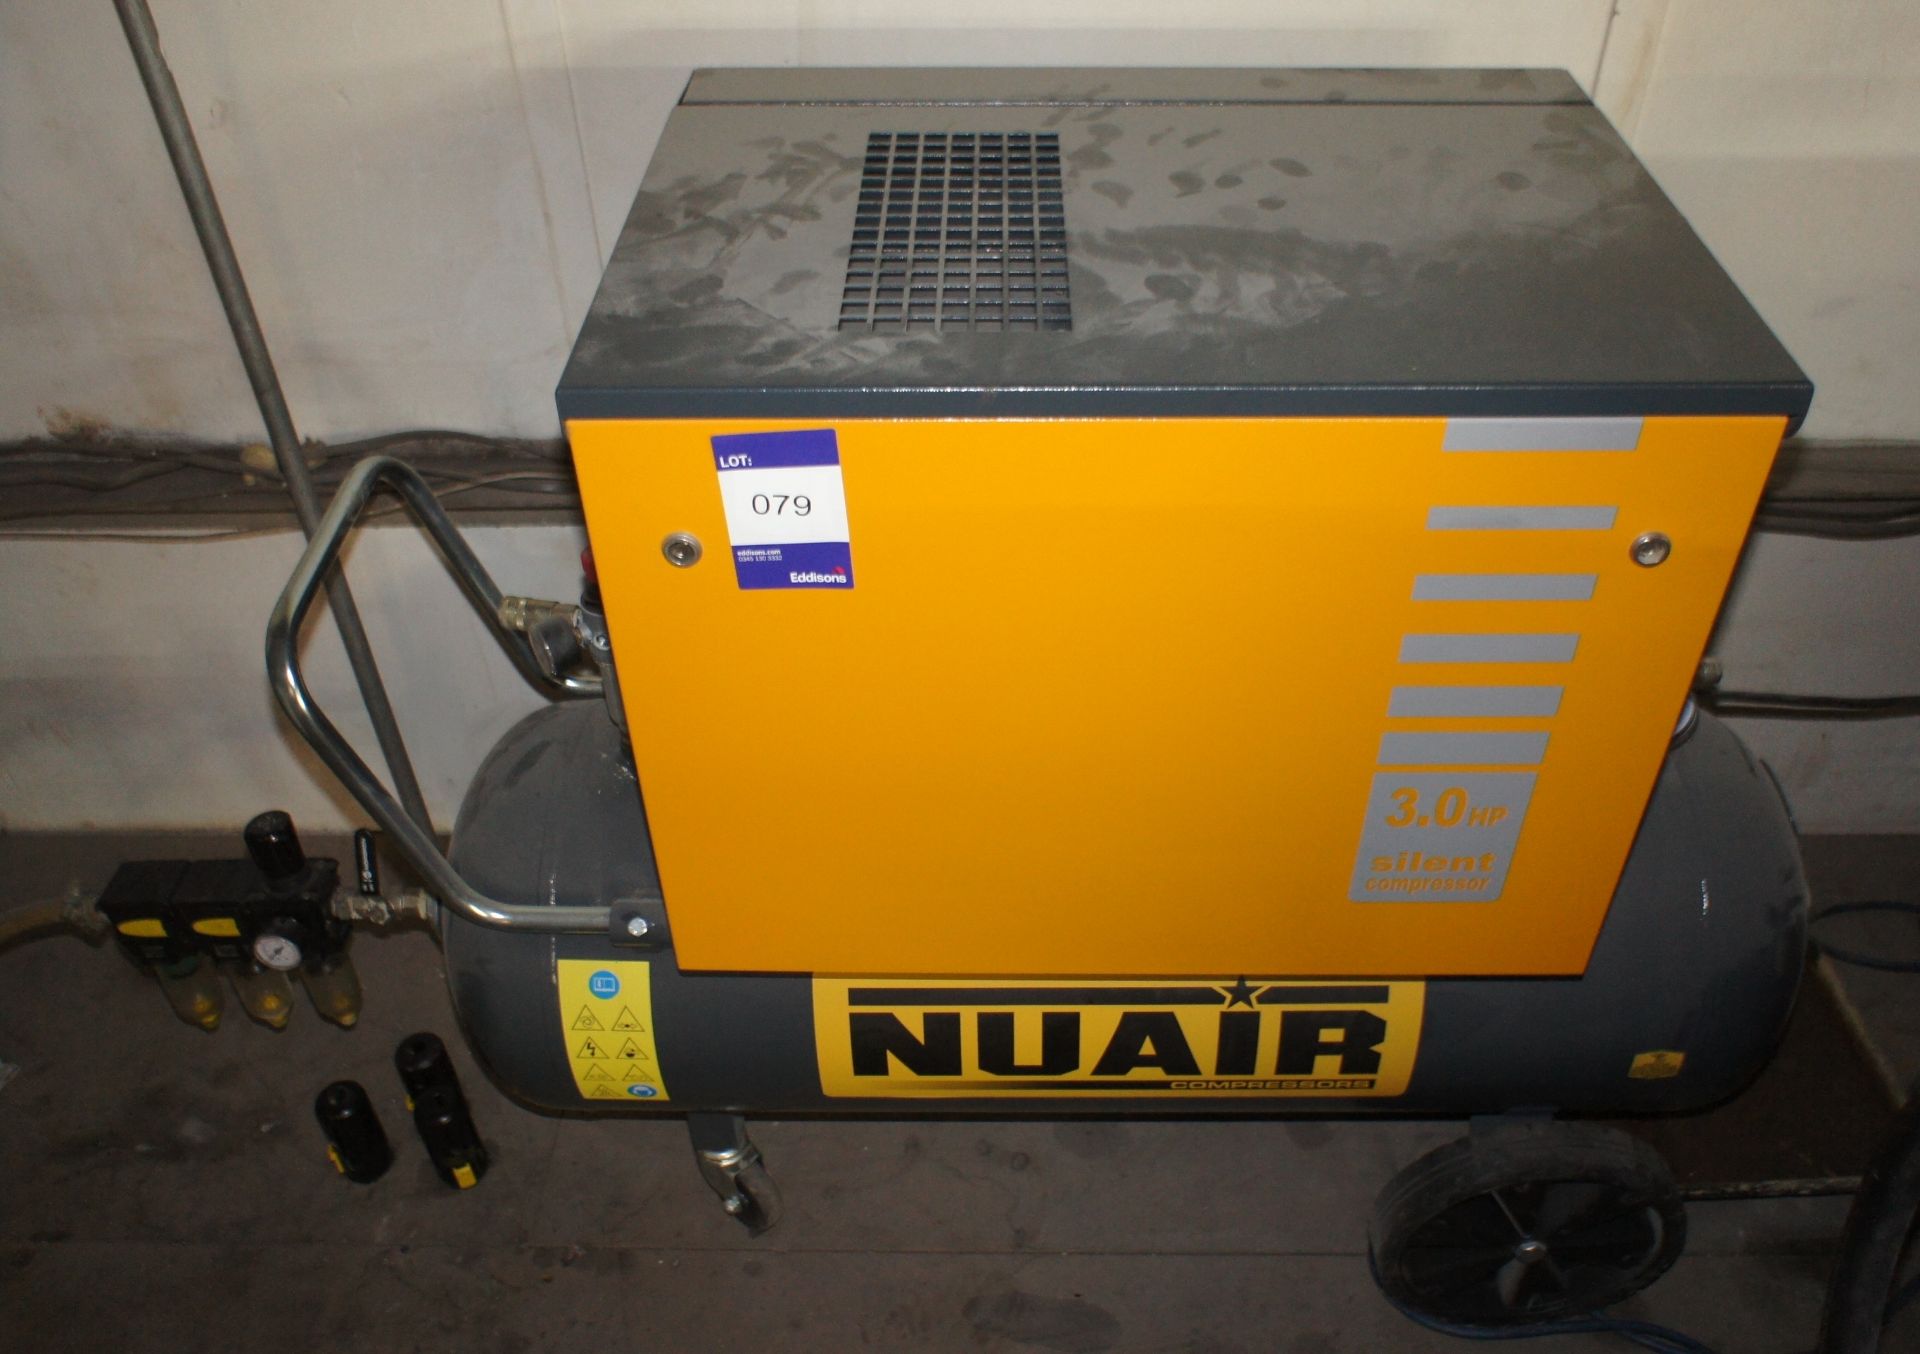 Nuair B3800/3U/100G workshop compressor, year 2019 - Image 2 of 4